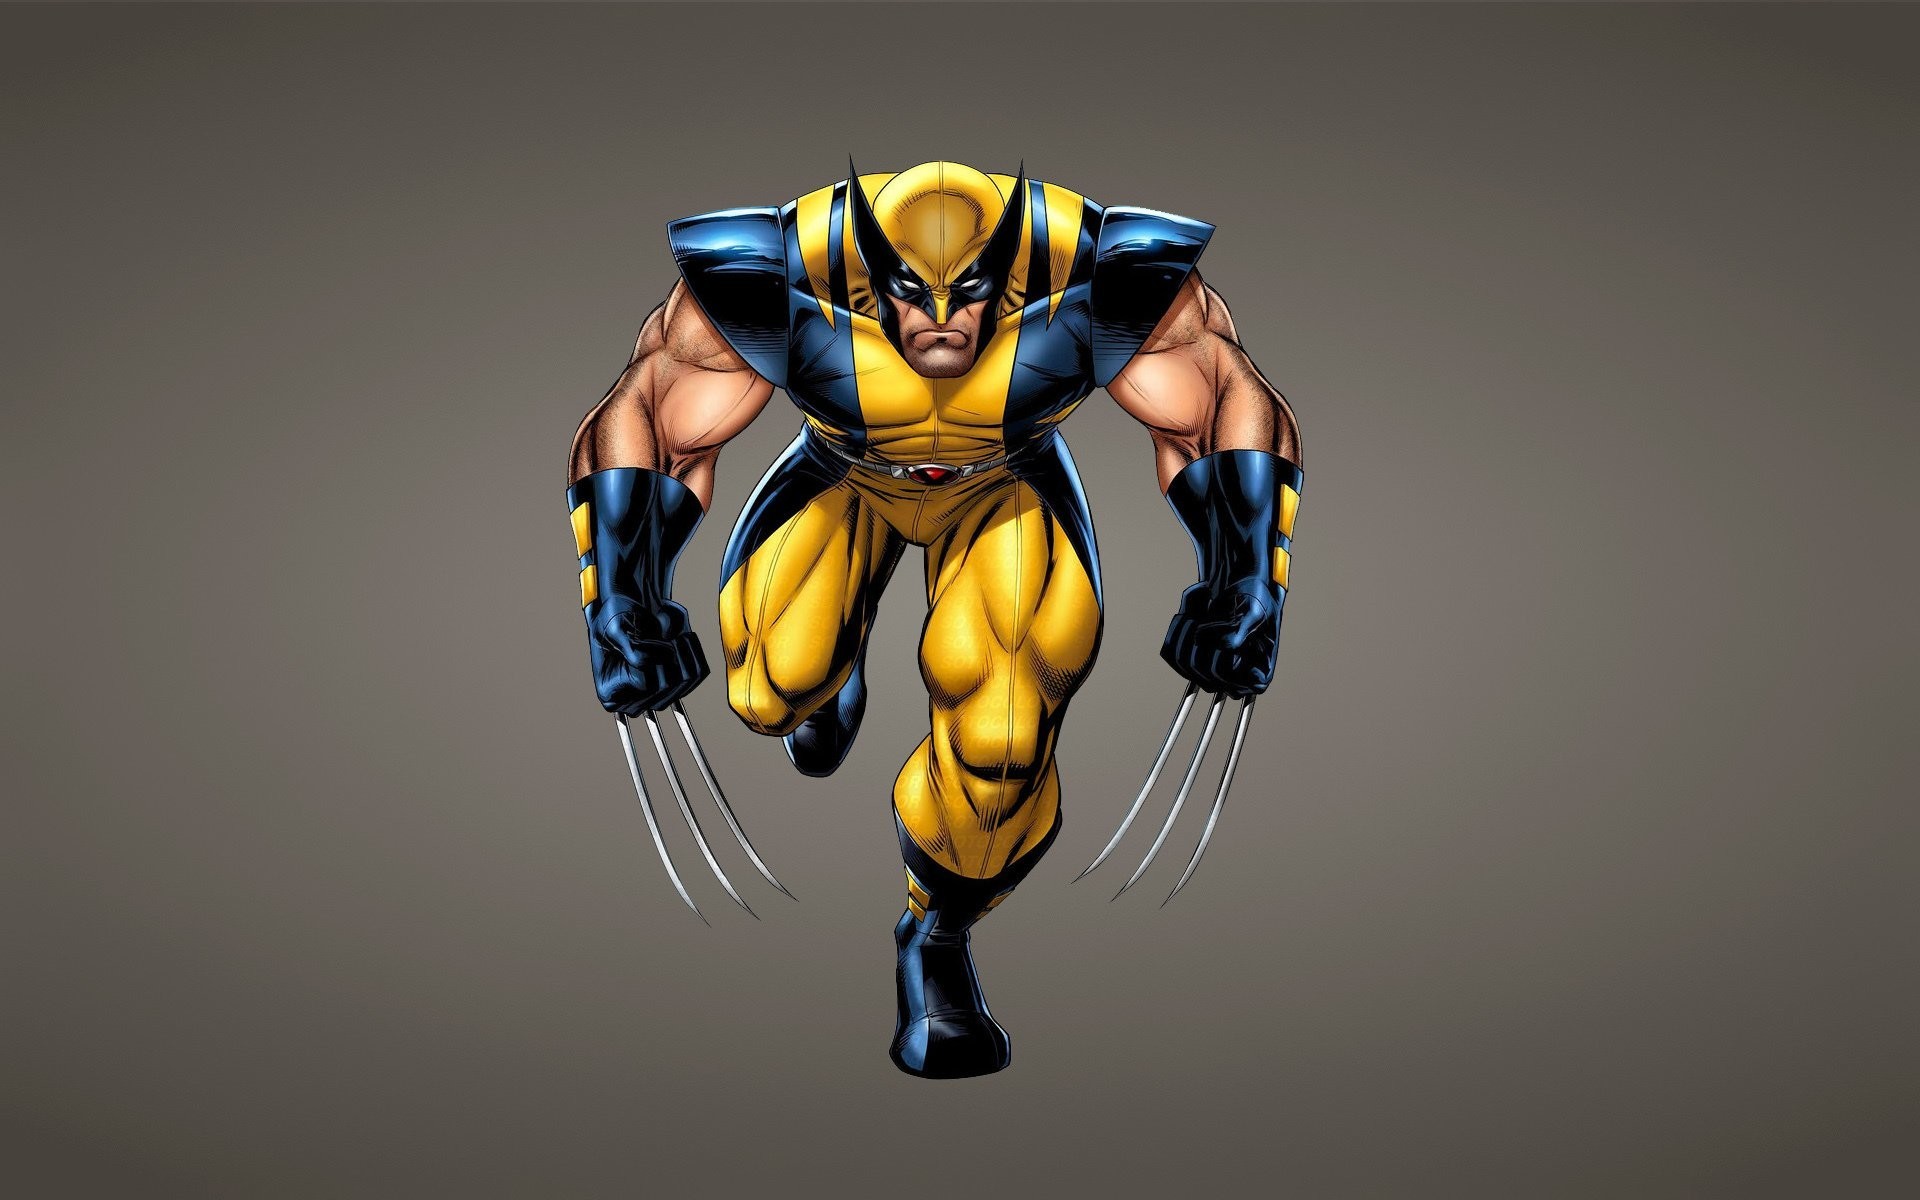 X Men Wolverine 2018 Wallpaper background picture